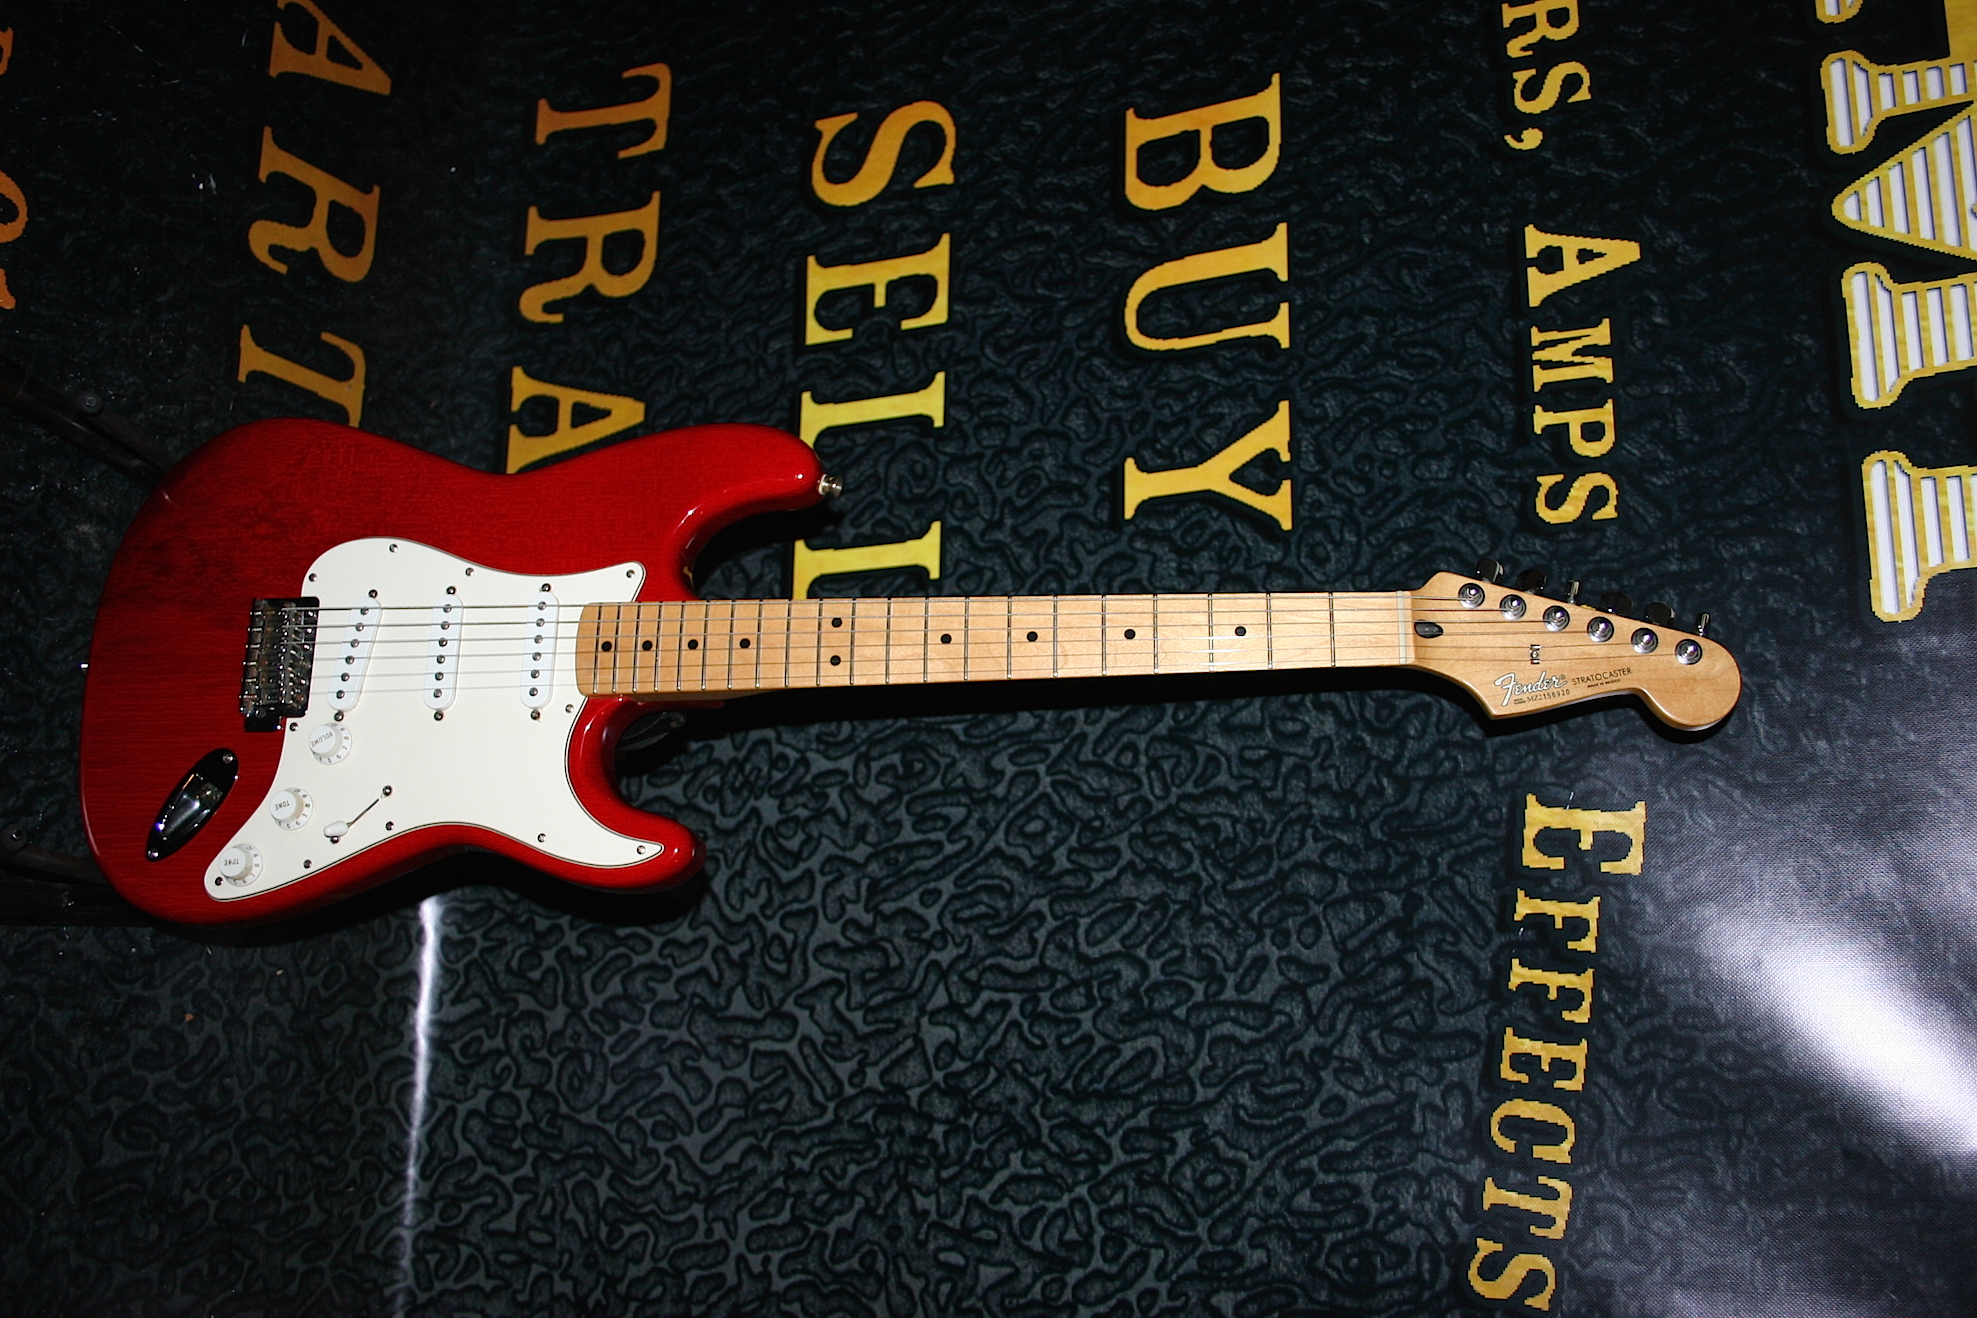 Fender 2002 mex strat**SOLD - Amp Guitars, Macclesfield